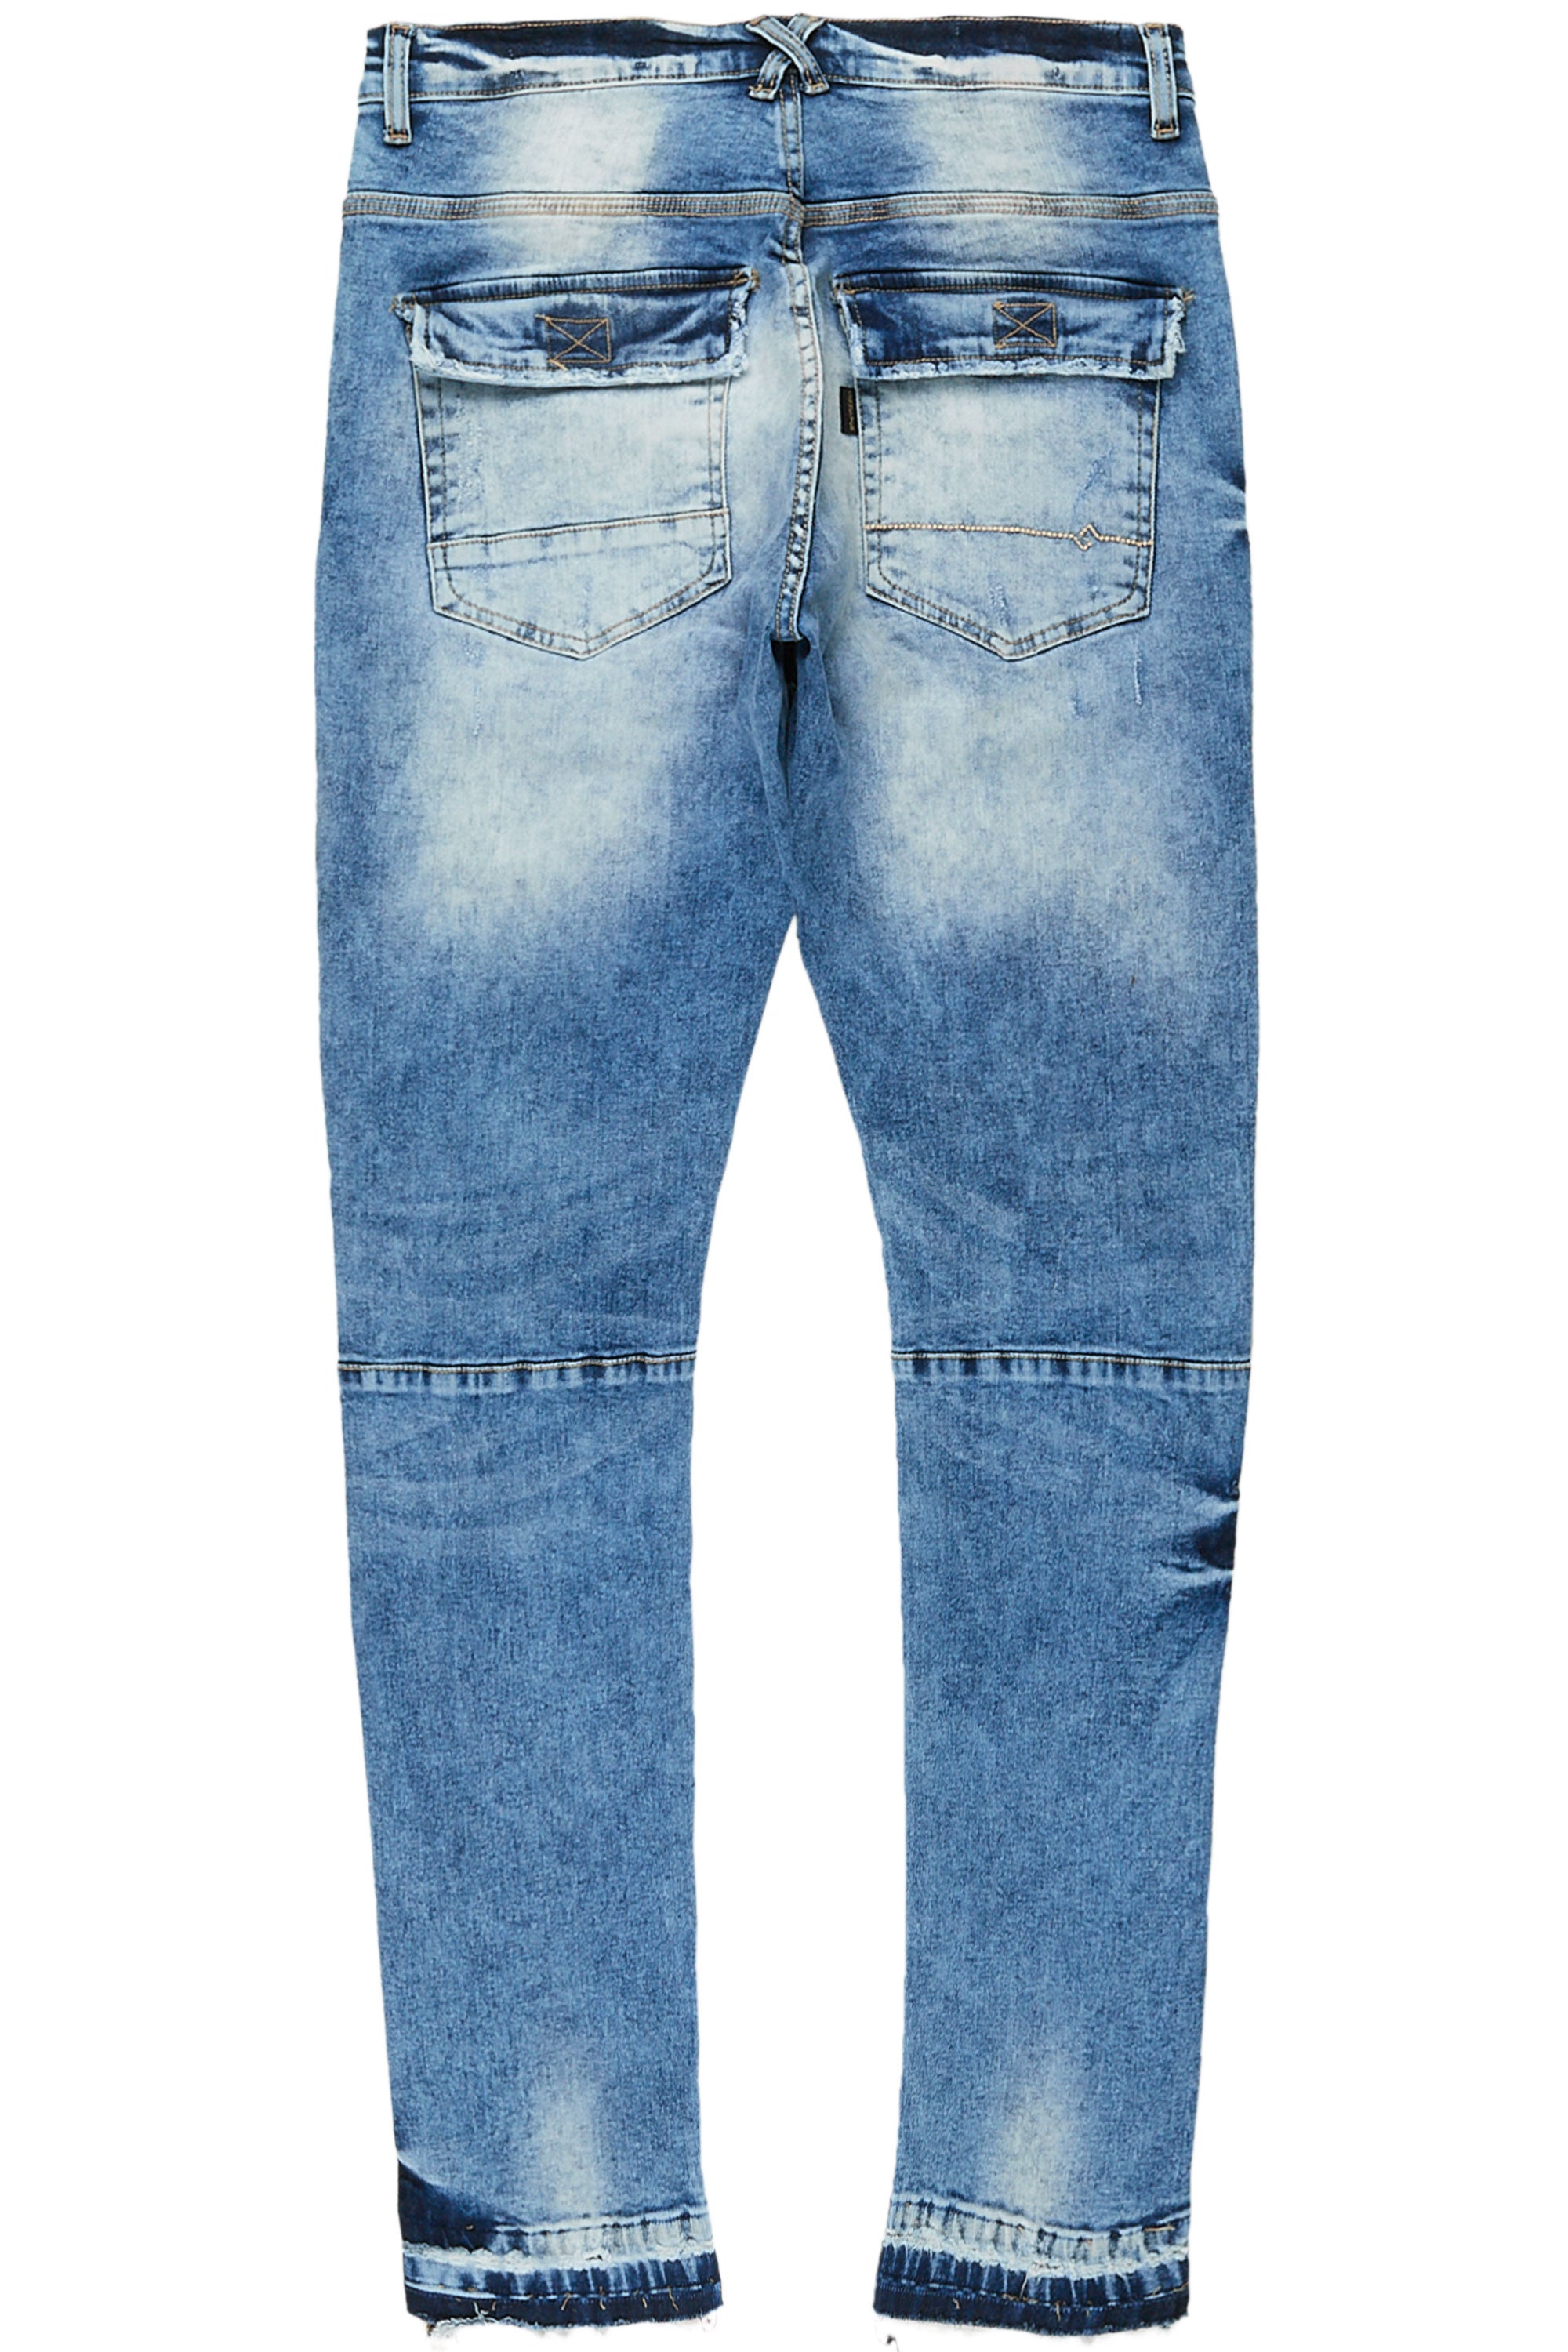 Kaipo Light Blue Pocket Jean